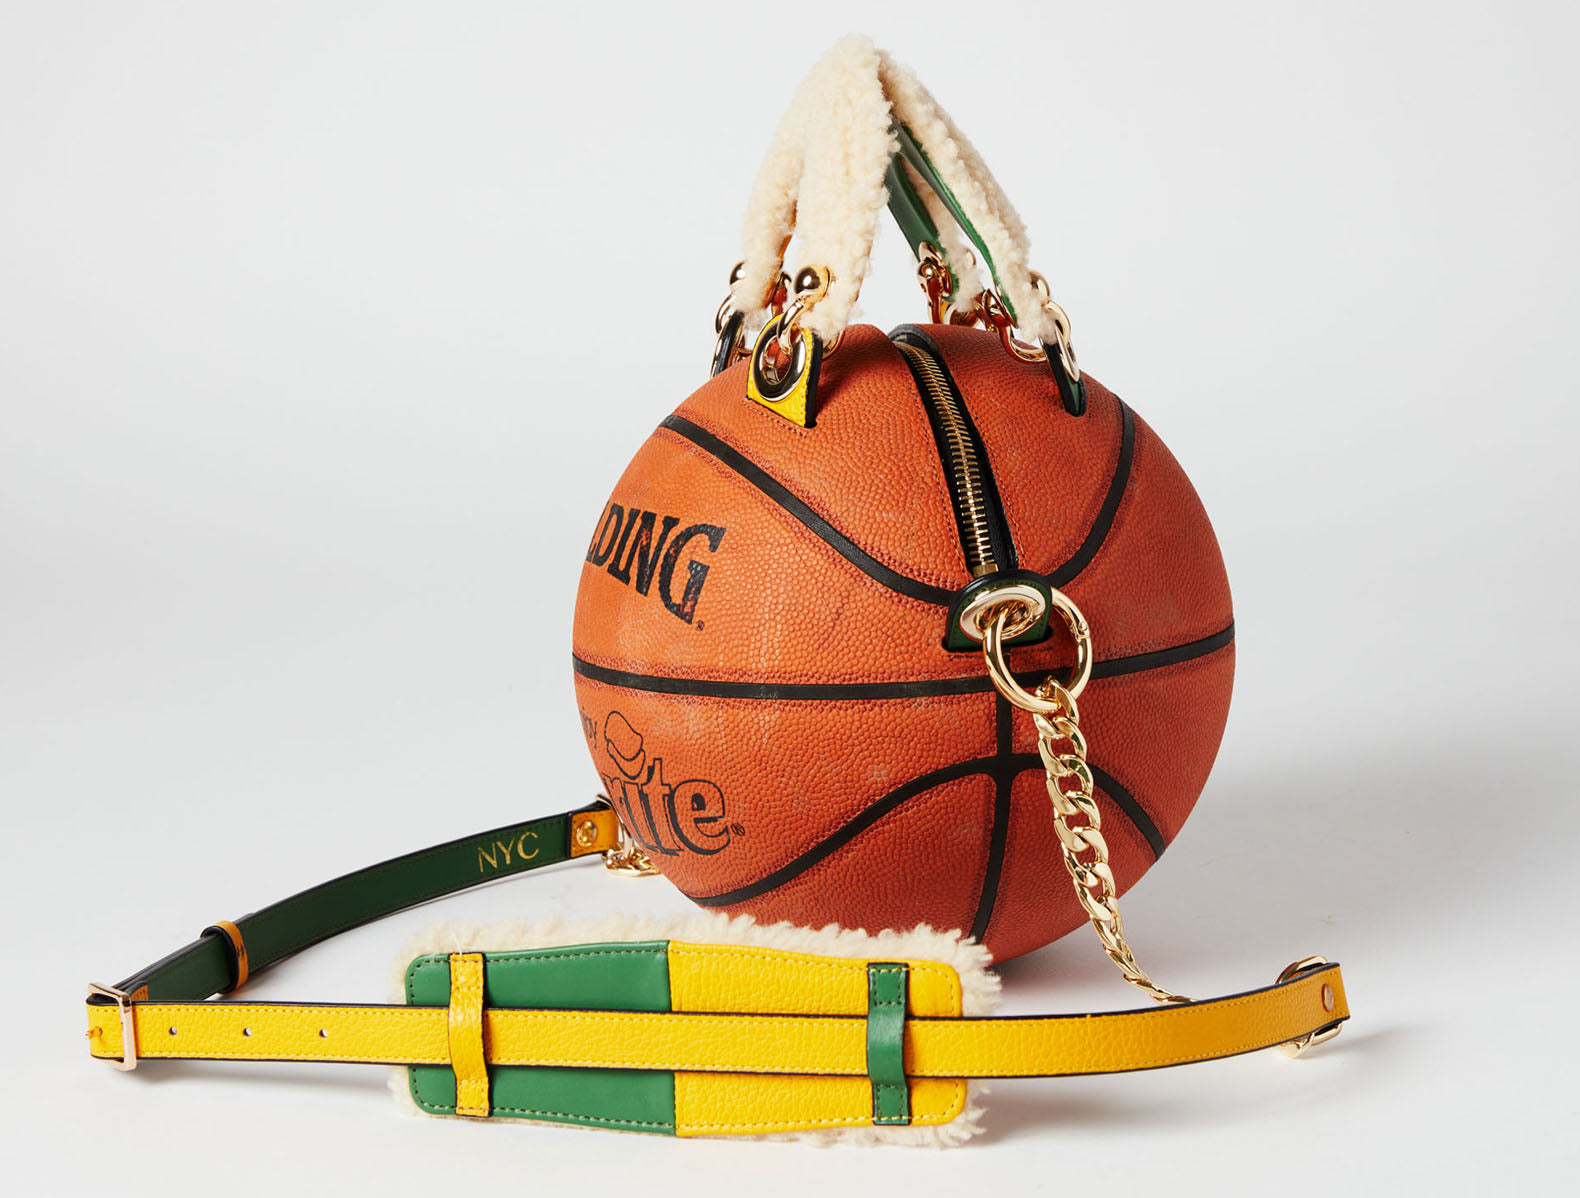 SPALDING Basketball Ball Bag 49-001 | eBay